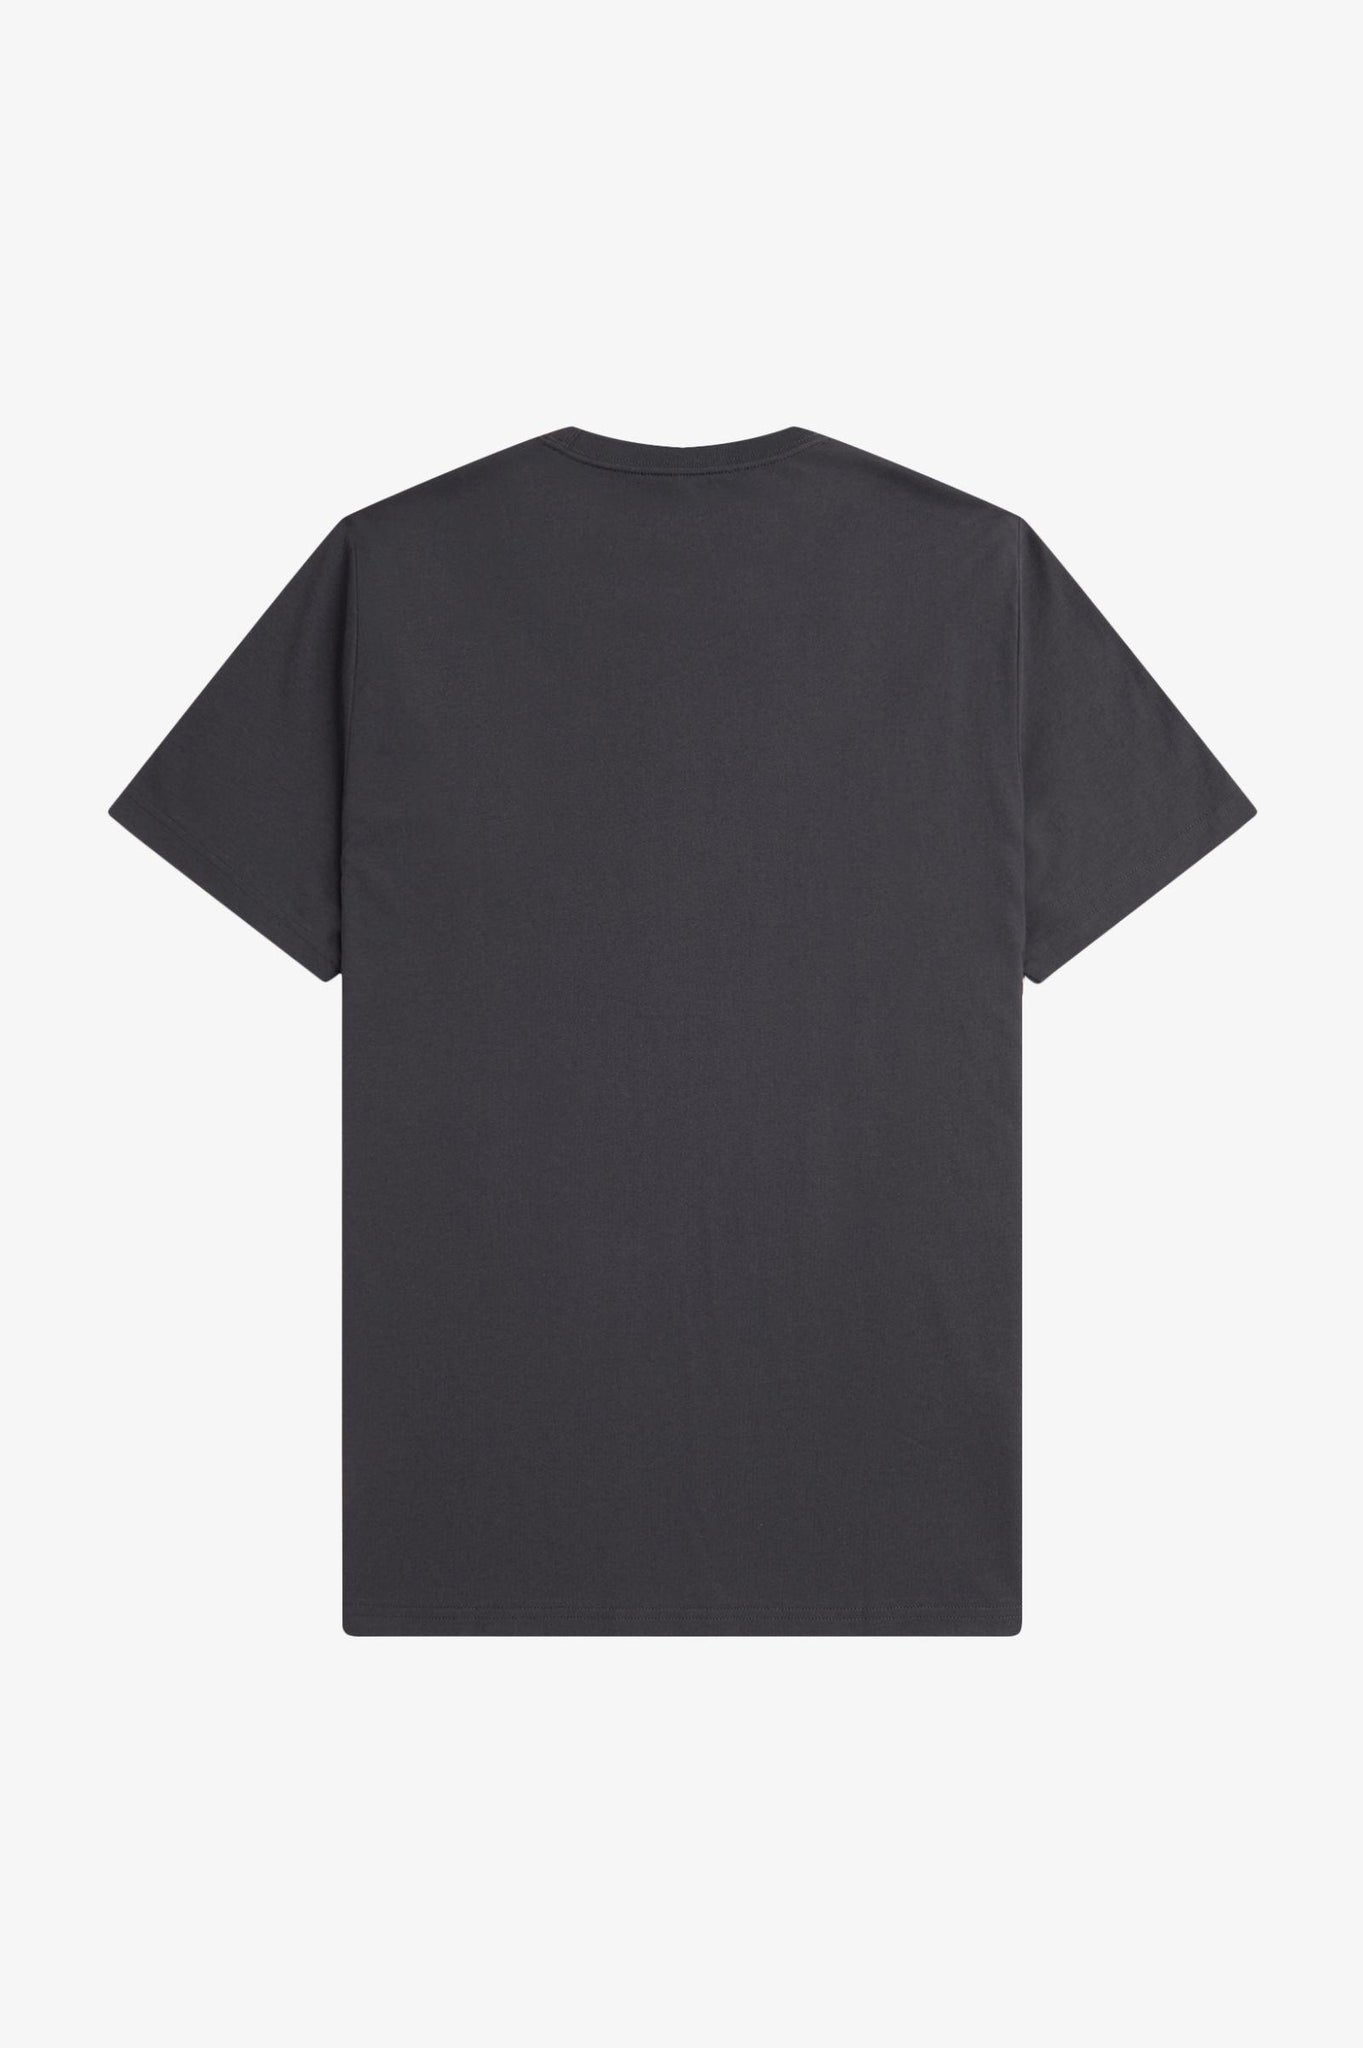 Camiseta Fred Perry M1600 Gris Ancla Caramelo Oscuro - ECRU